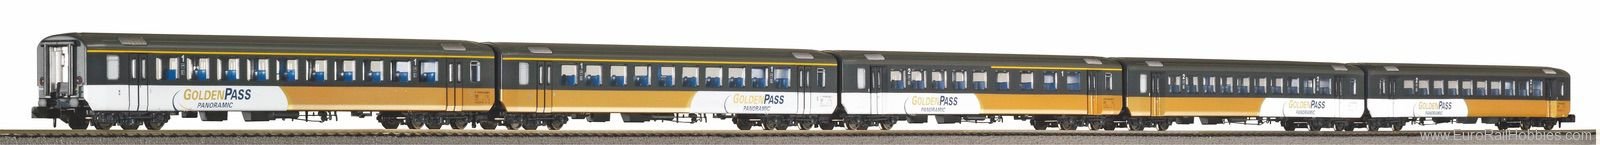 Piko 94399 N Set of 5 passenger coaches EW I Golden Pass